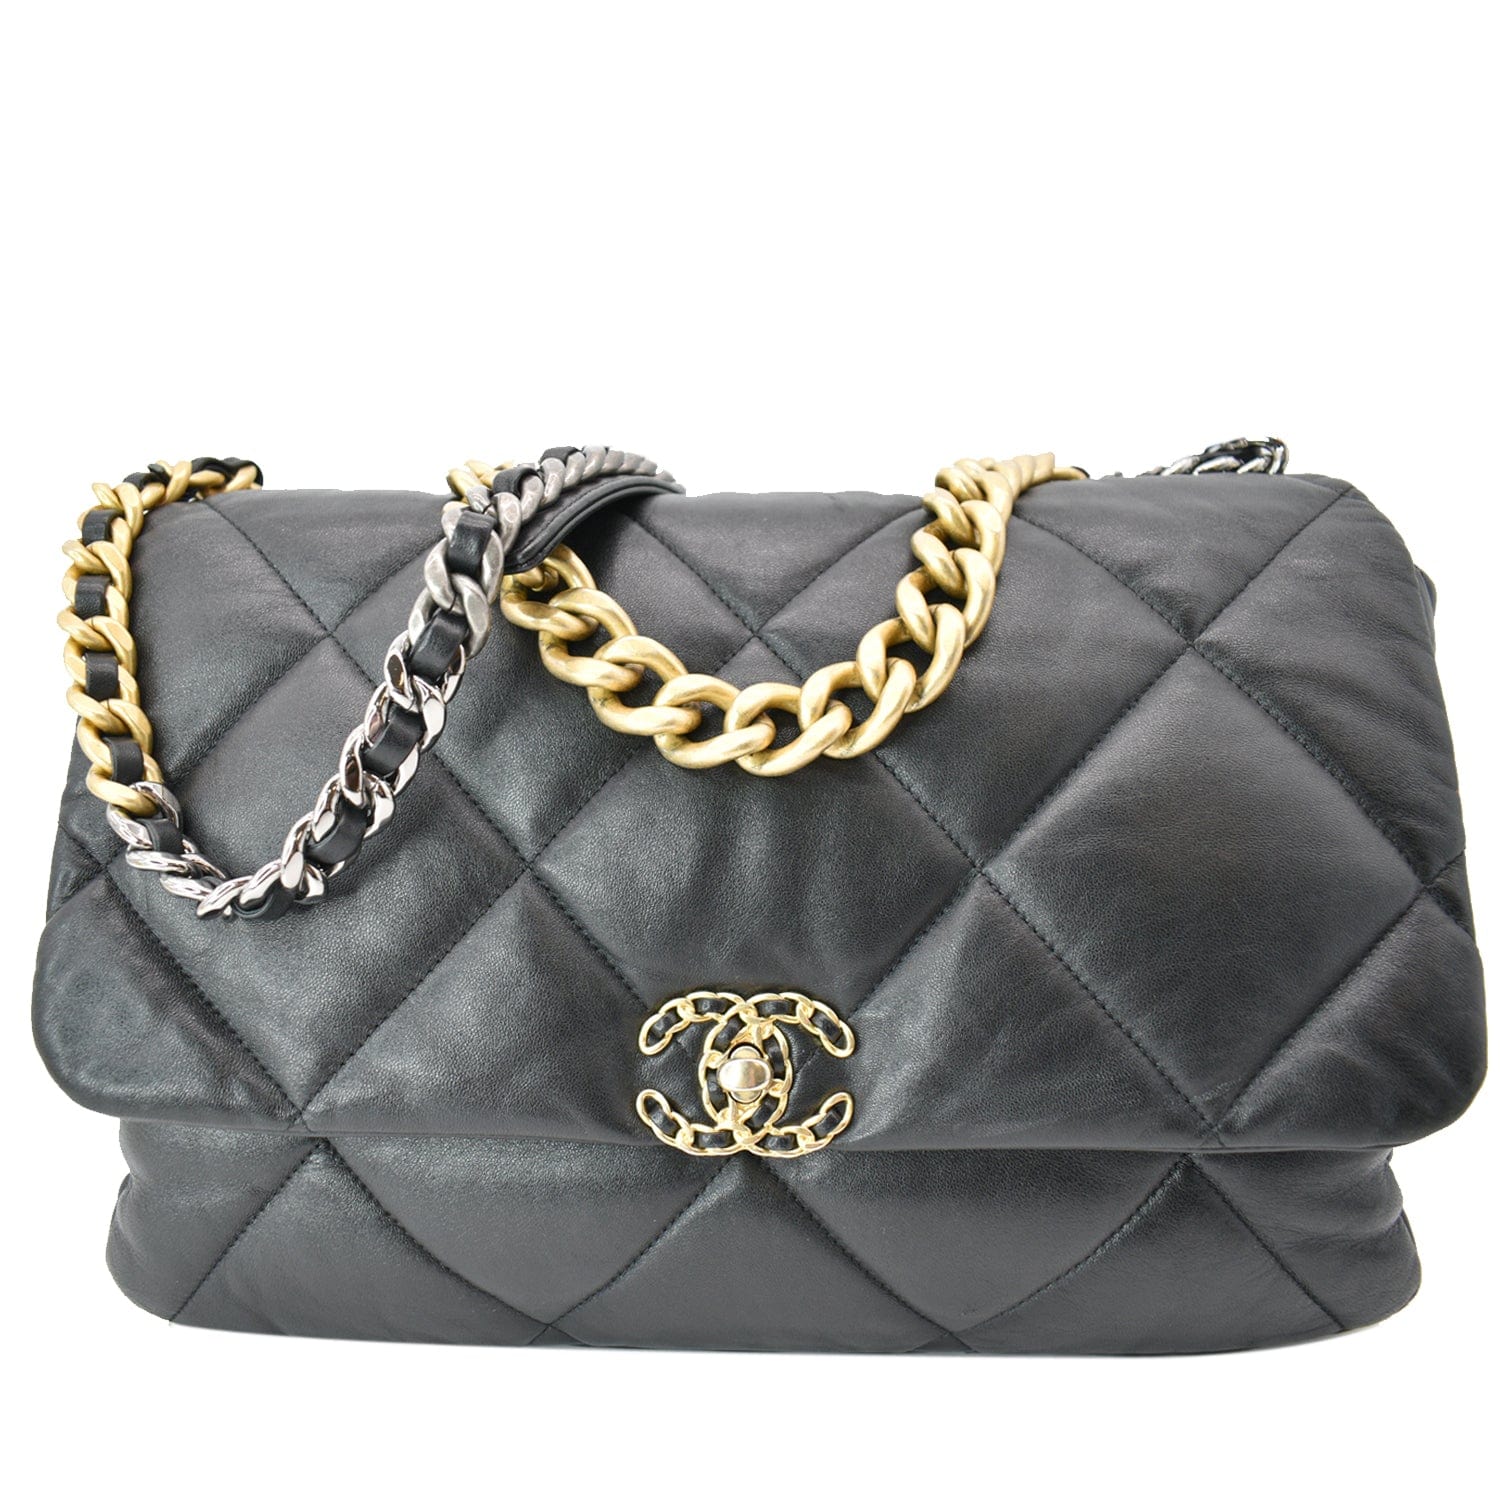 Chanel 19 Black Lambskin Large Crossbody Bag for Sale in